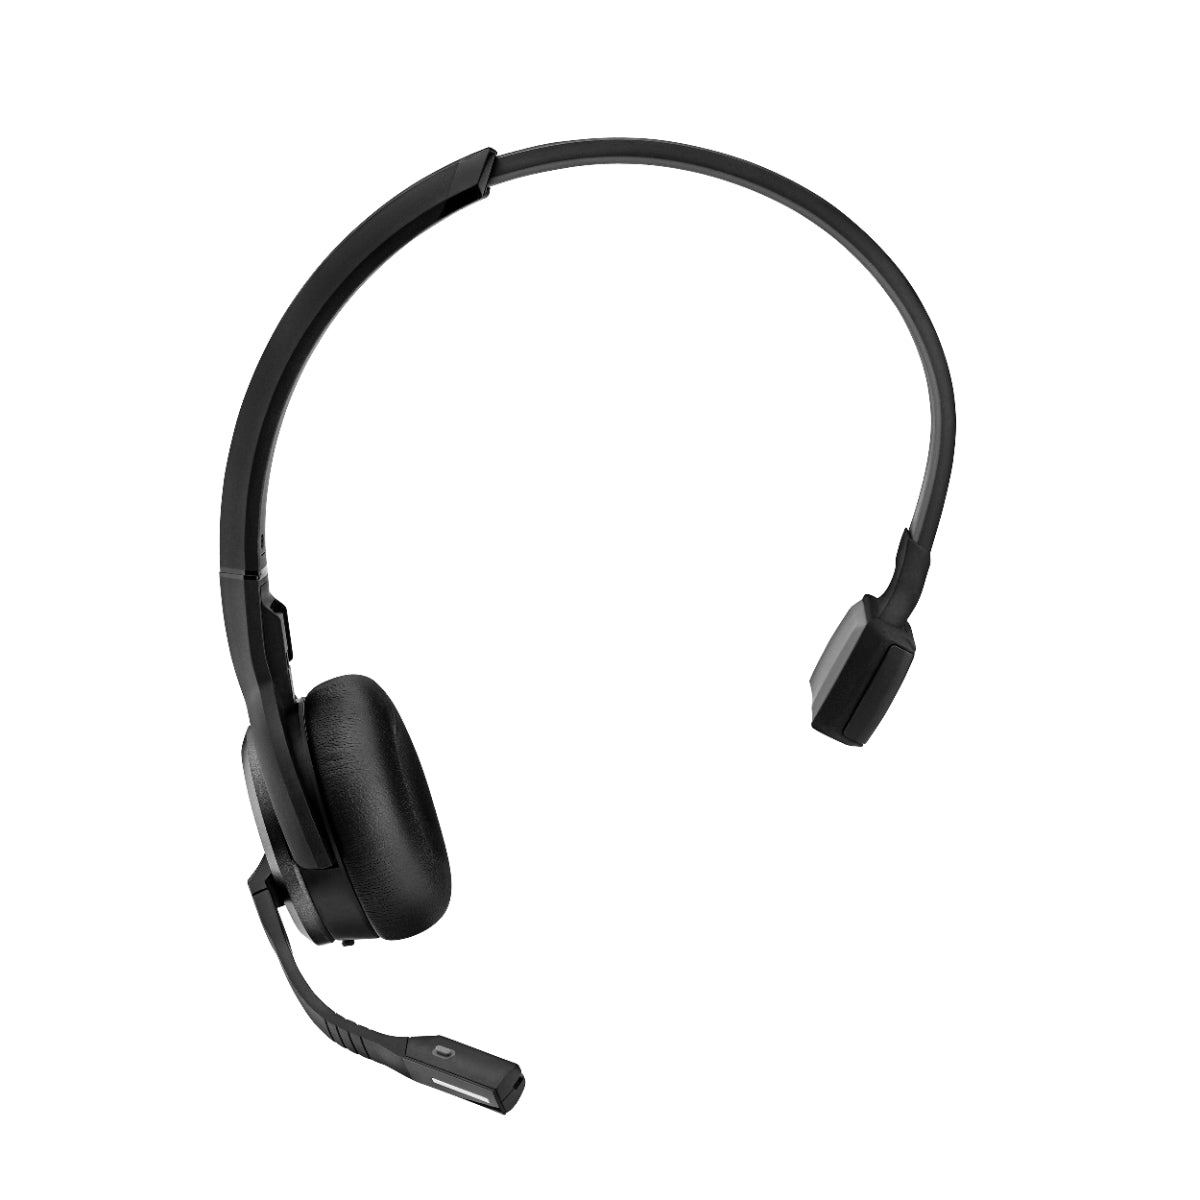 EPOS IMPACT SDW 5033 - EU Wireless Monaural DECT Headset, Black, With Single Connectivity